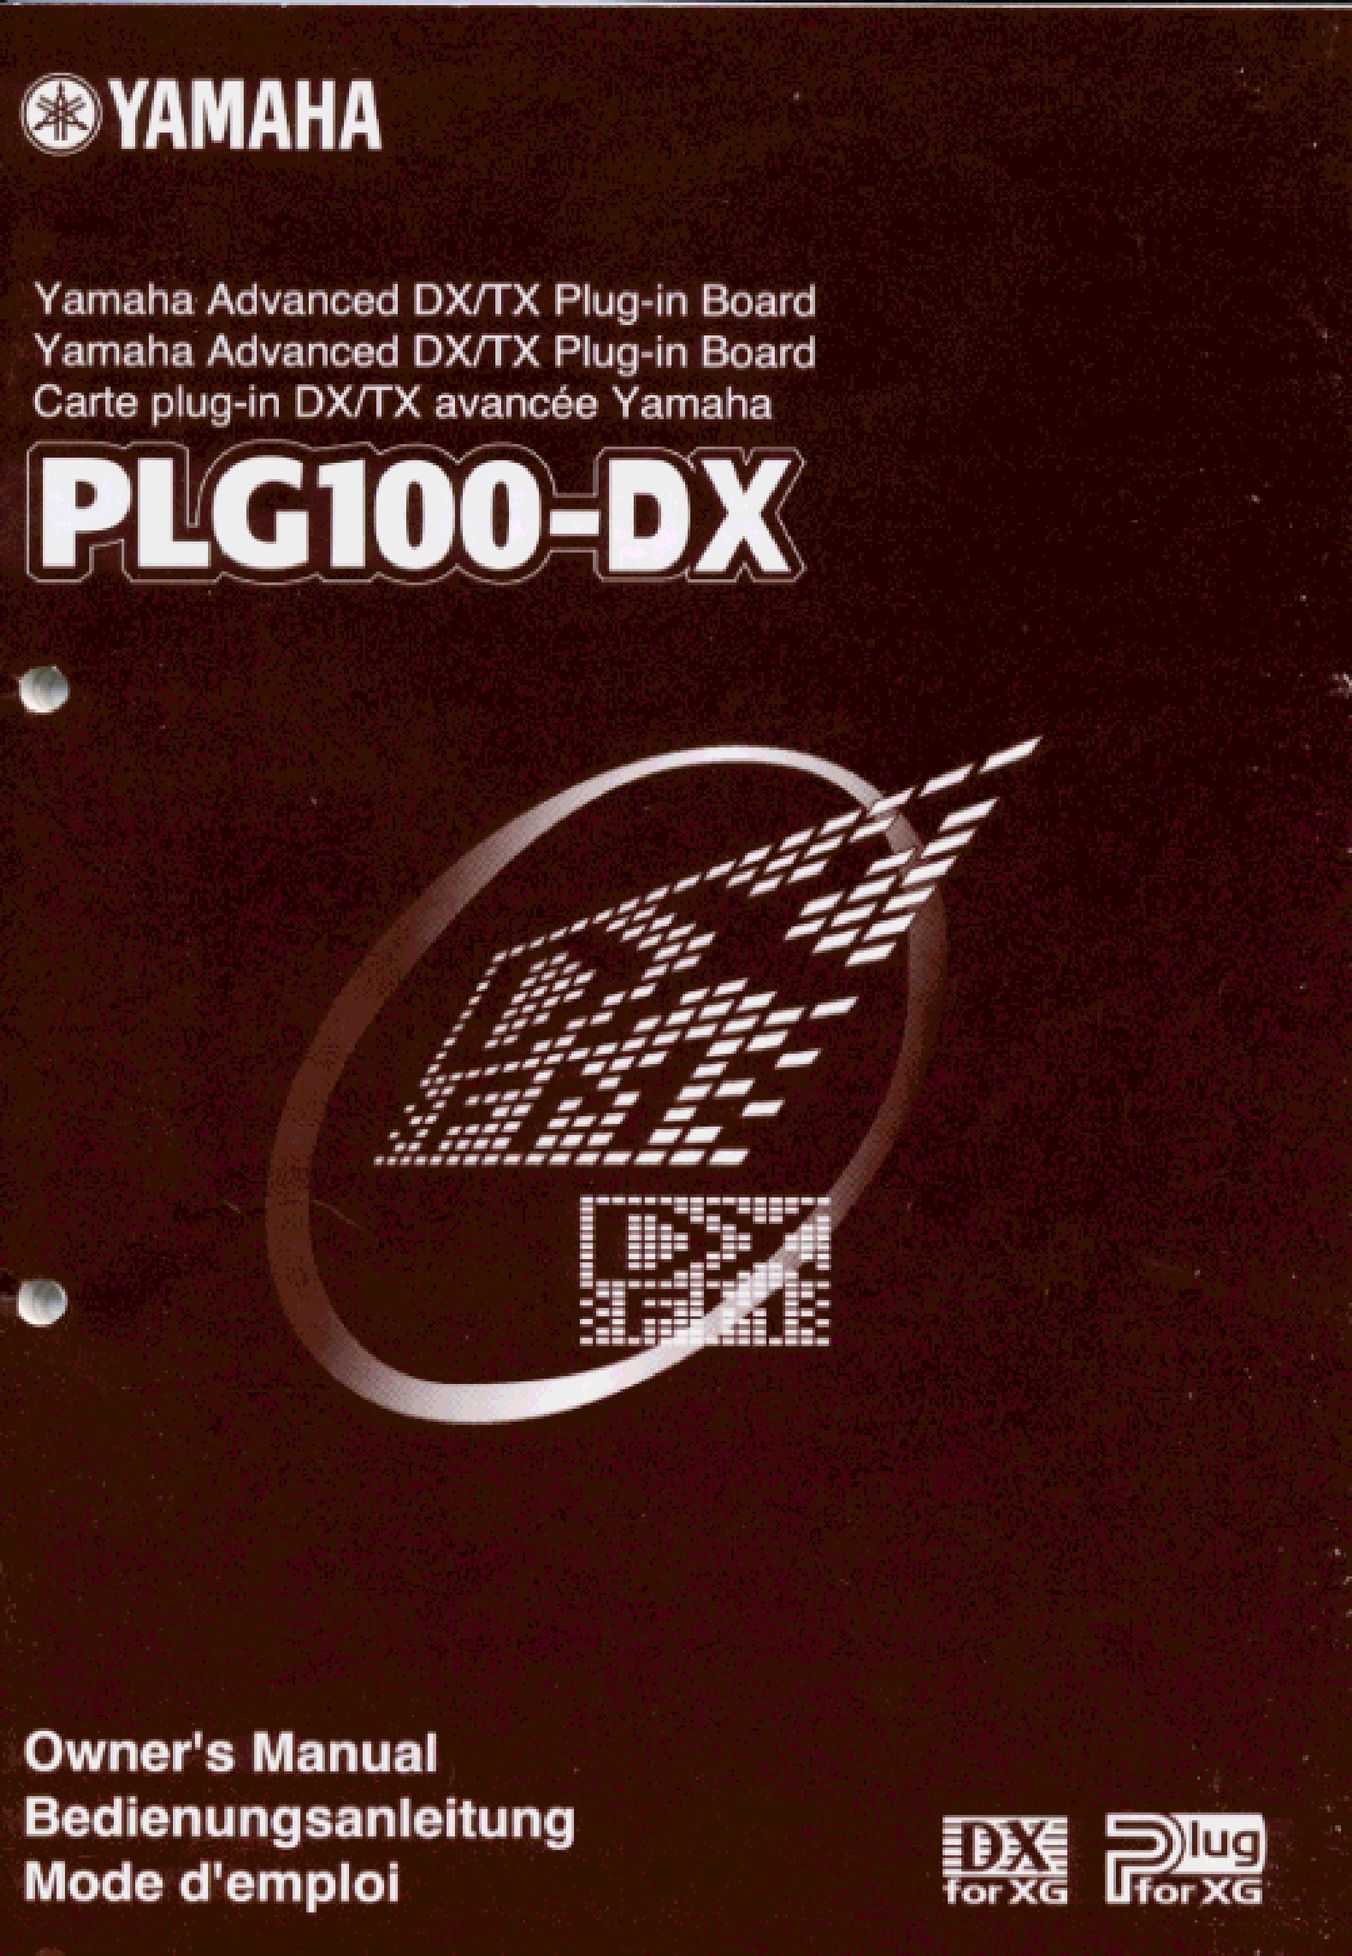 Yamaha PLG100-DX Home Theater Server User Manual